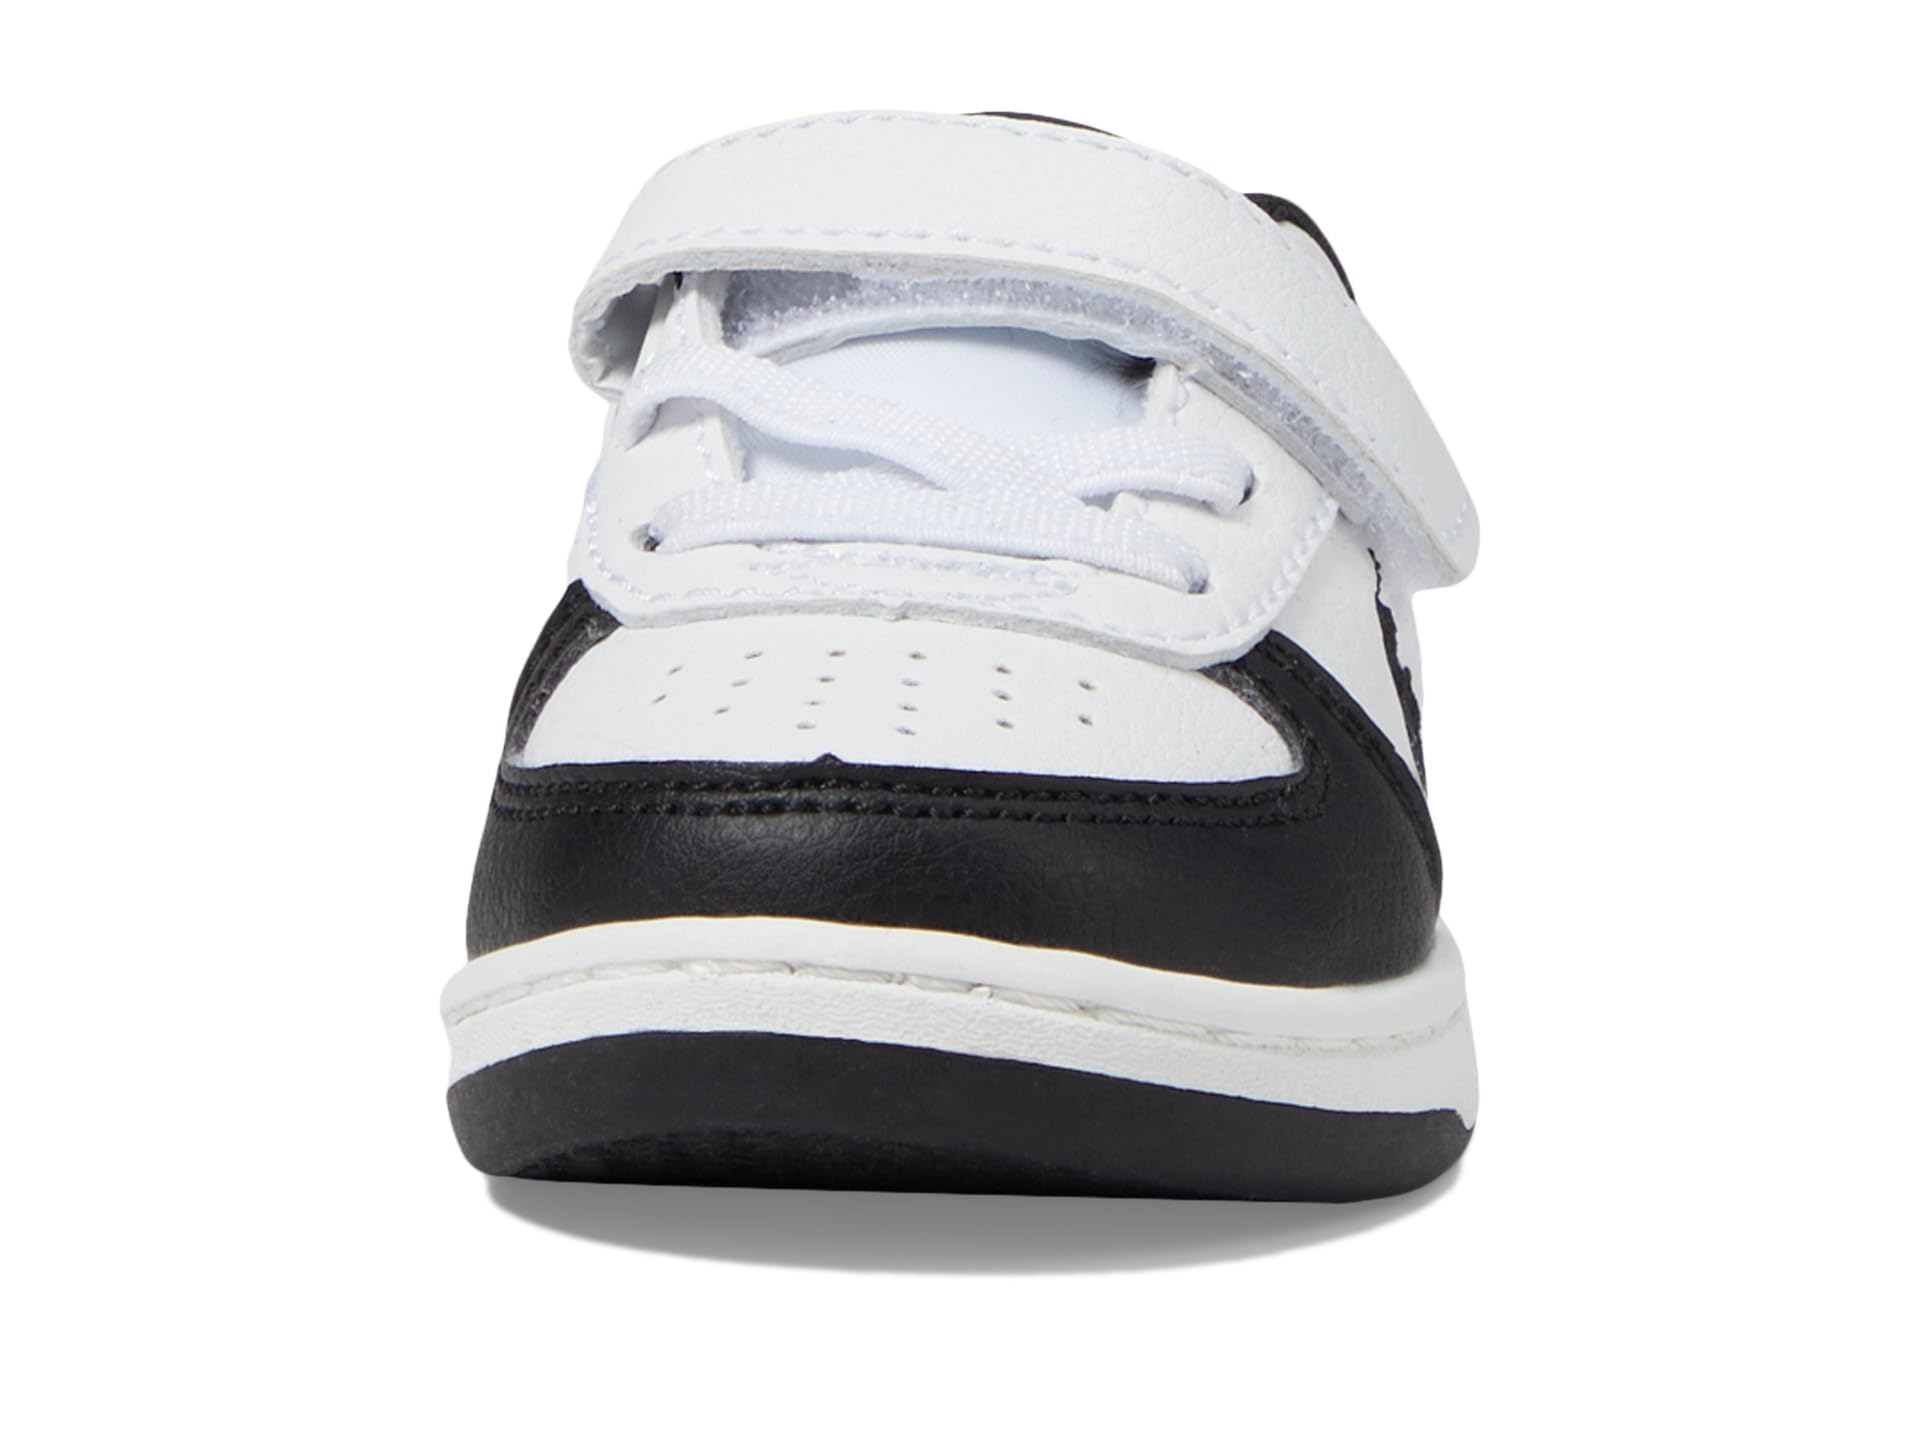 Polo Ralph Lauren Unisex-Child Polo Court Ii Ps (Toddler) Sneaker